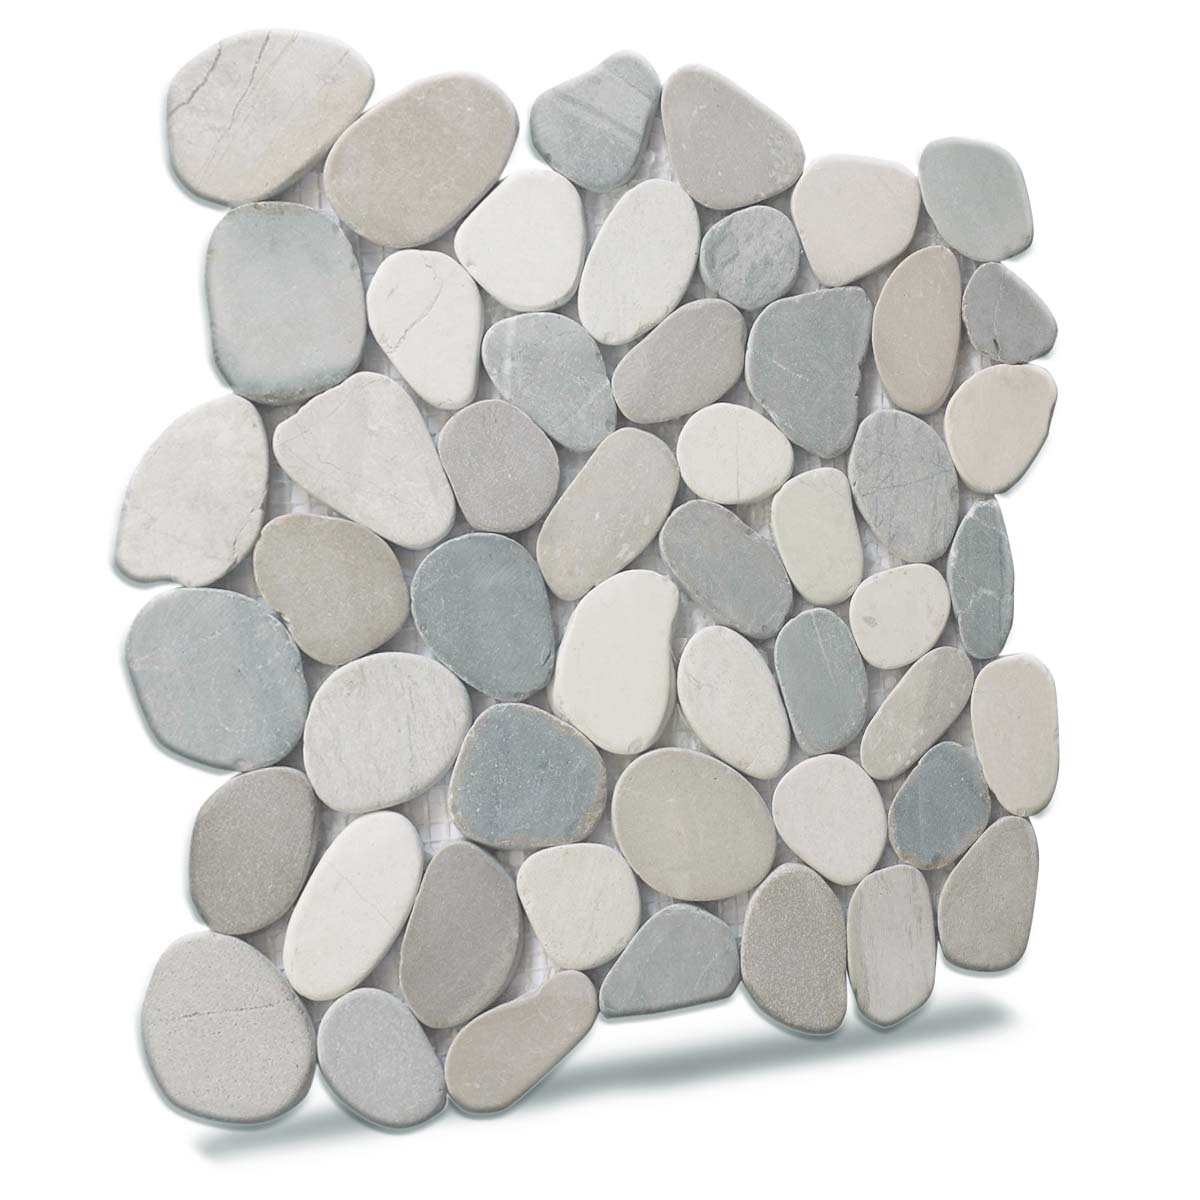 Multicolor Mosaic Tile, Mix Blend Sliced Pebble Wall & Floor Tile